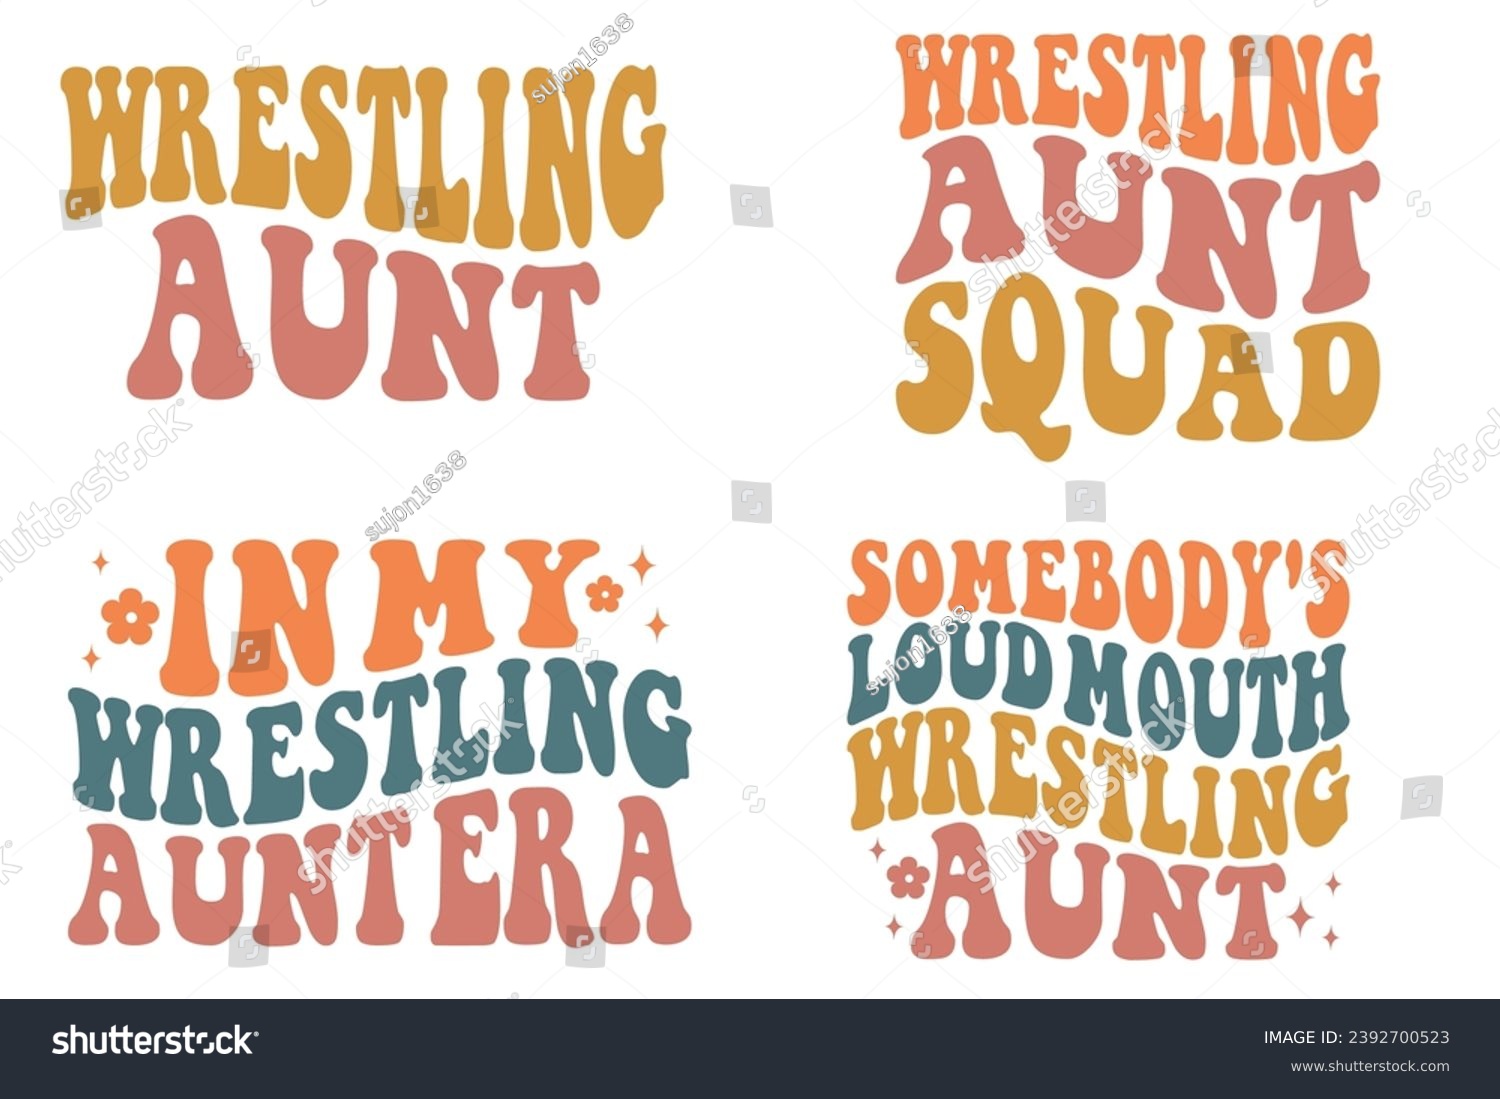 SVG of Wrestling Aunt, Wrestling Aunt Squad, In My Wrestling Aunt Era, Somebody's Loud Mouth Wrestling Aunt retro wavy T-shirt designs svg